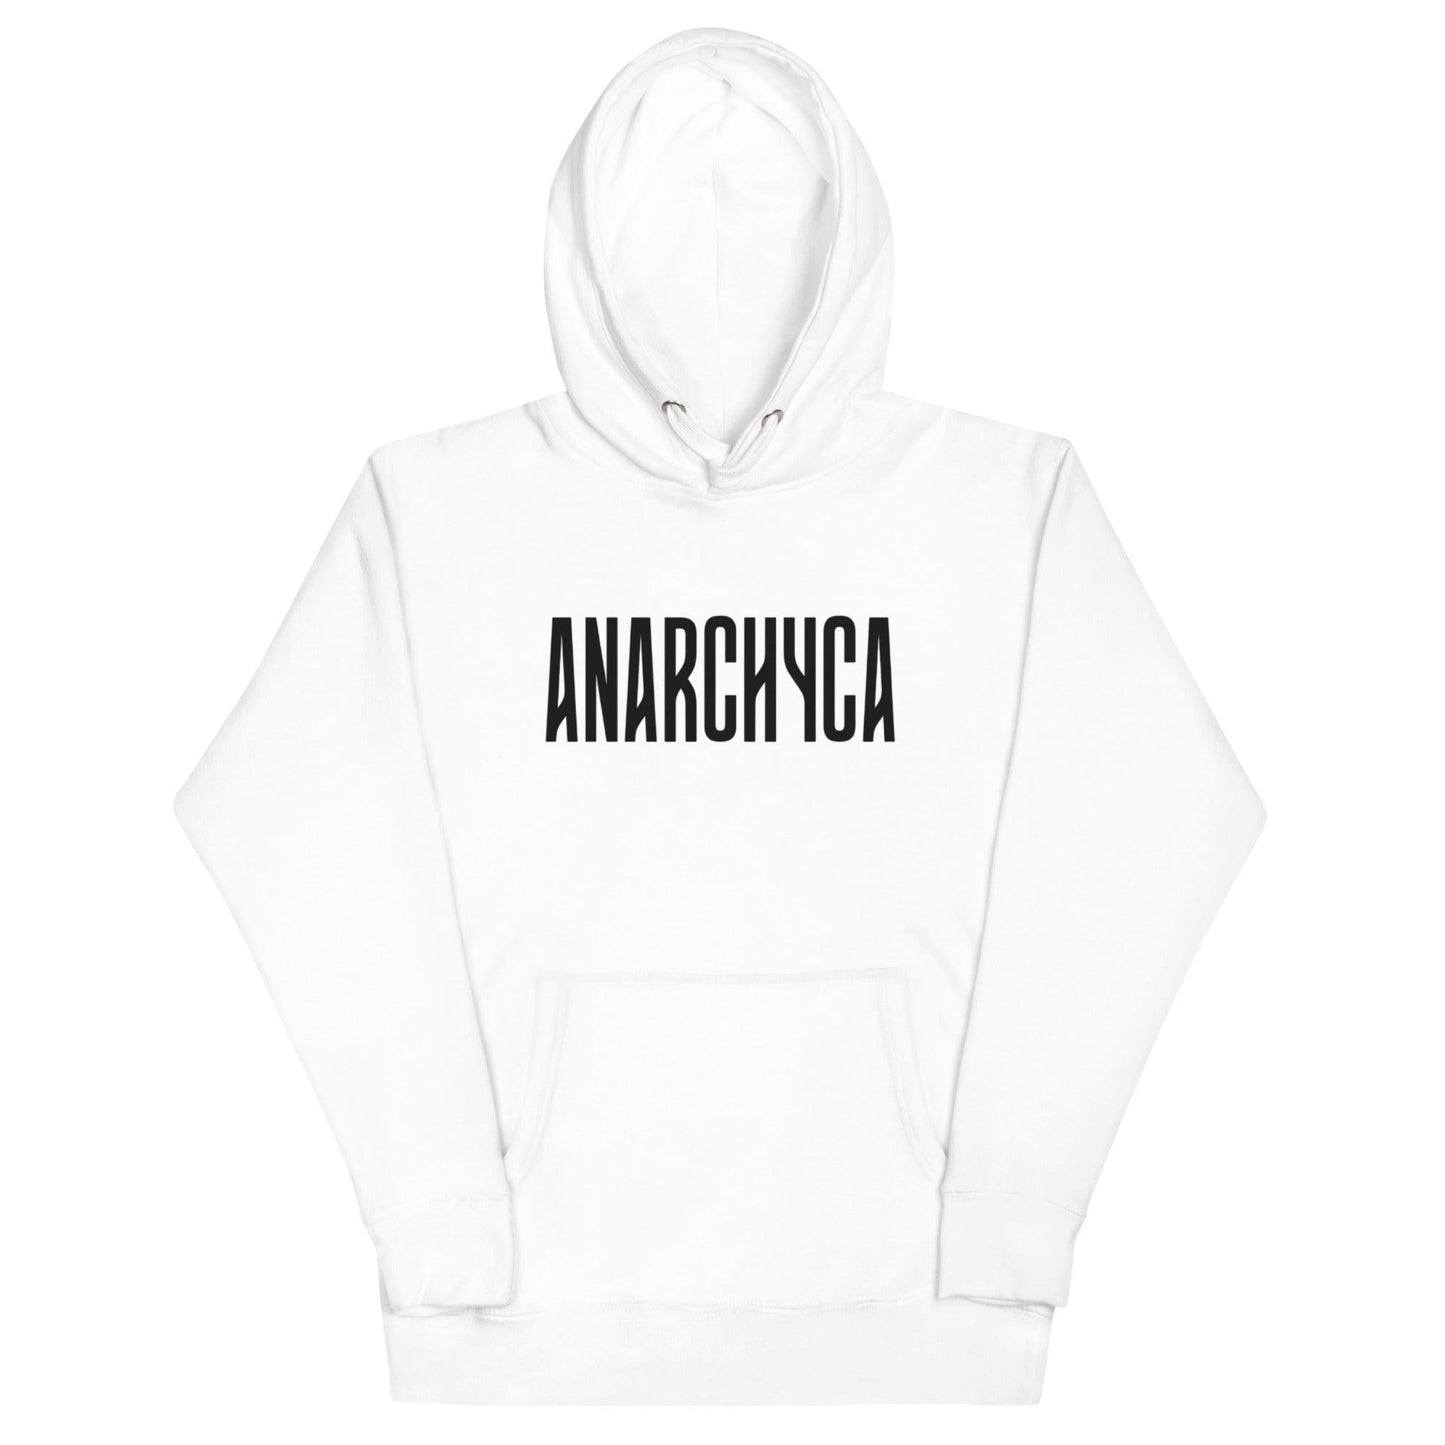 ANARCHYCA - Anarchyca-clothing